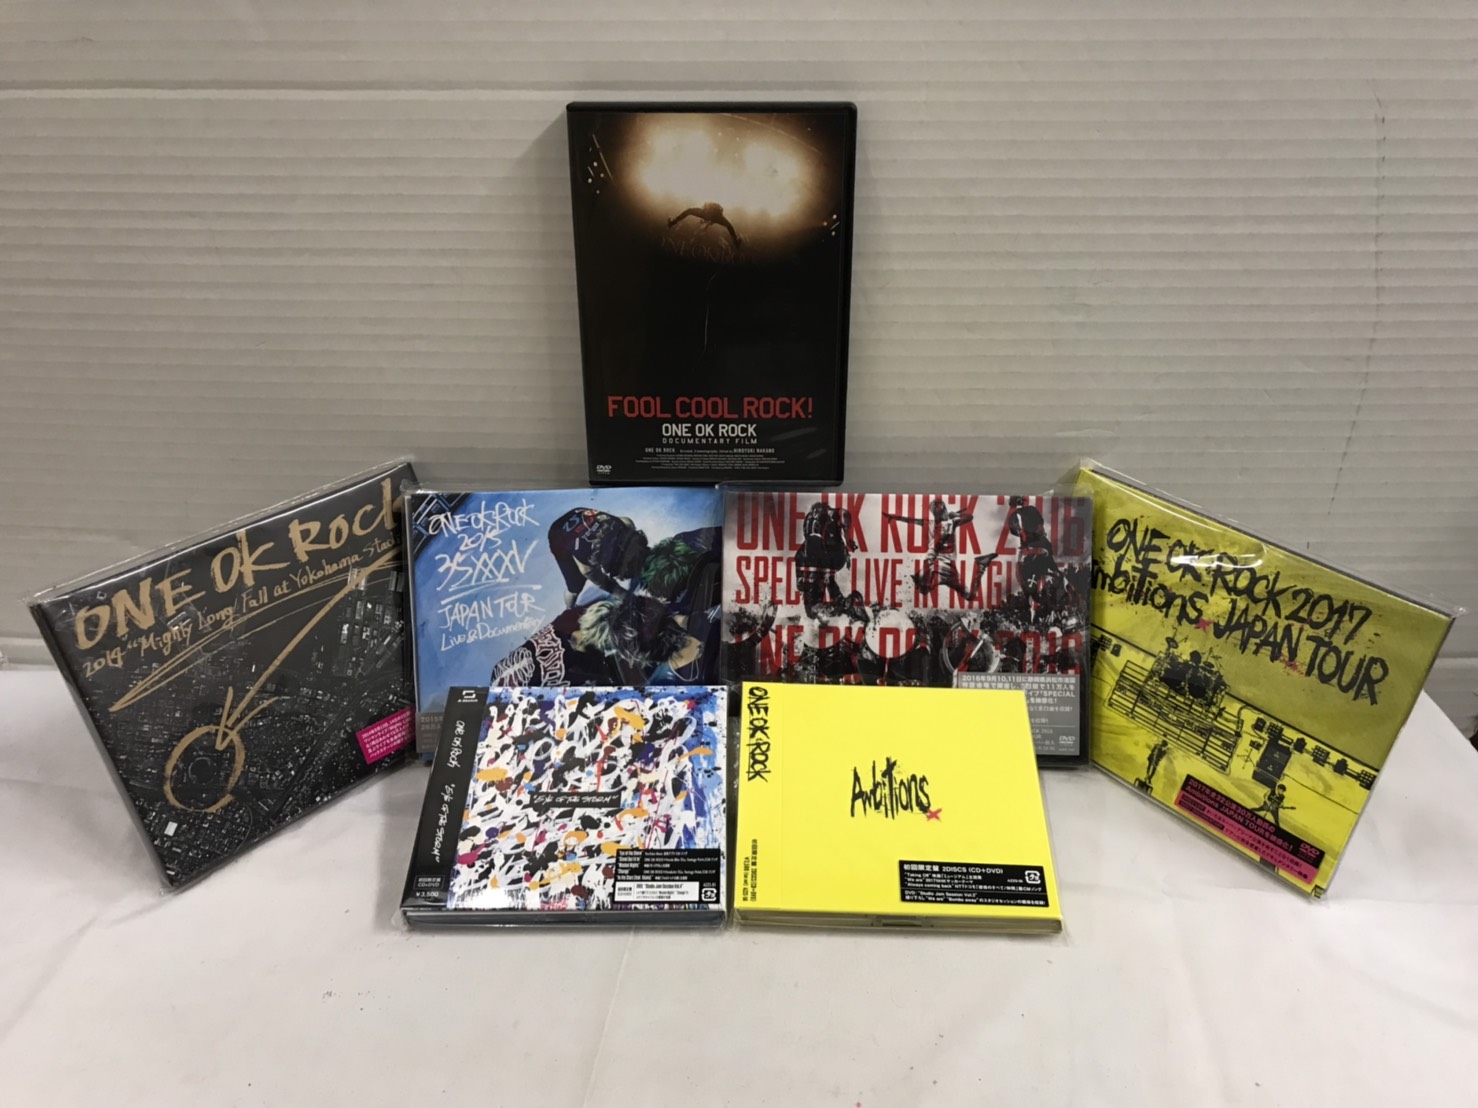 ONE OK ROCK ライブ DVD & Blu-ray 4枚セットワンオク - pure-home.eu